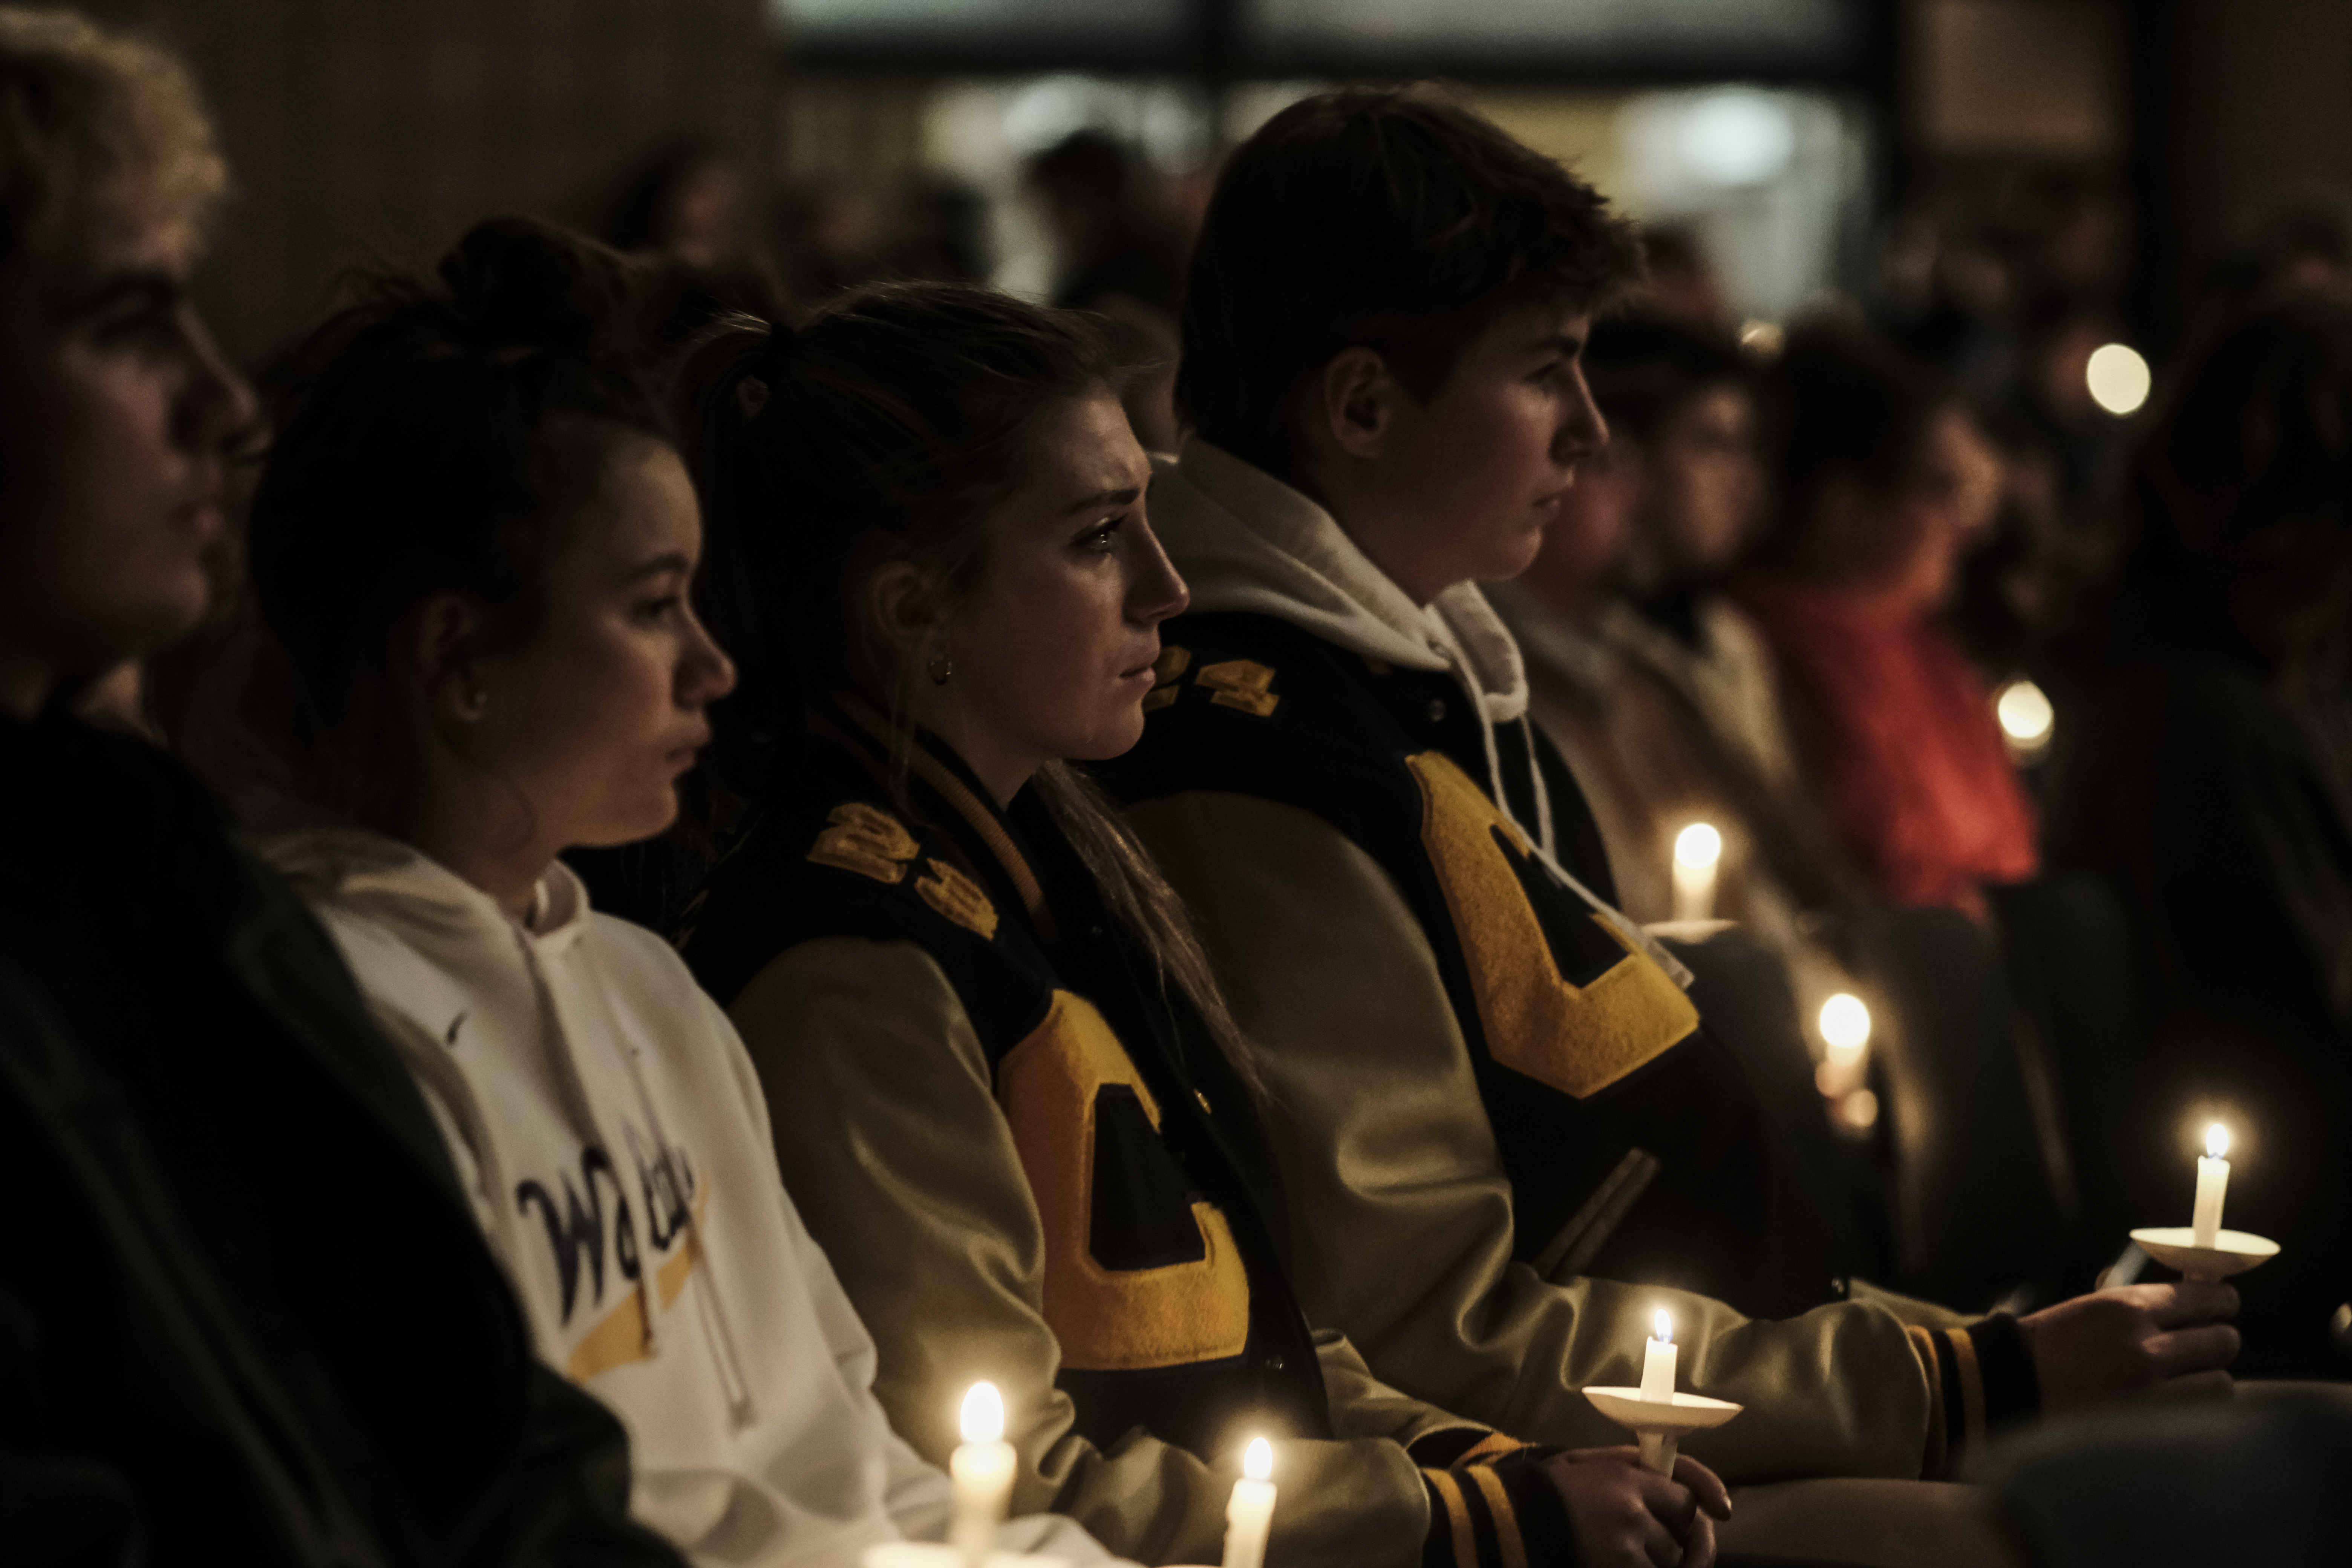 A vigil for Oxford High School shooting victims